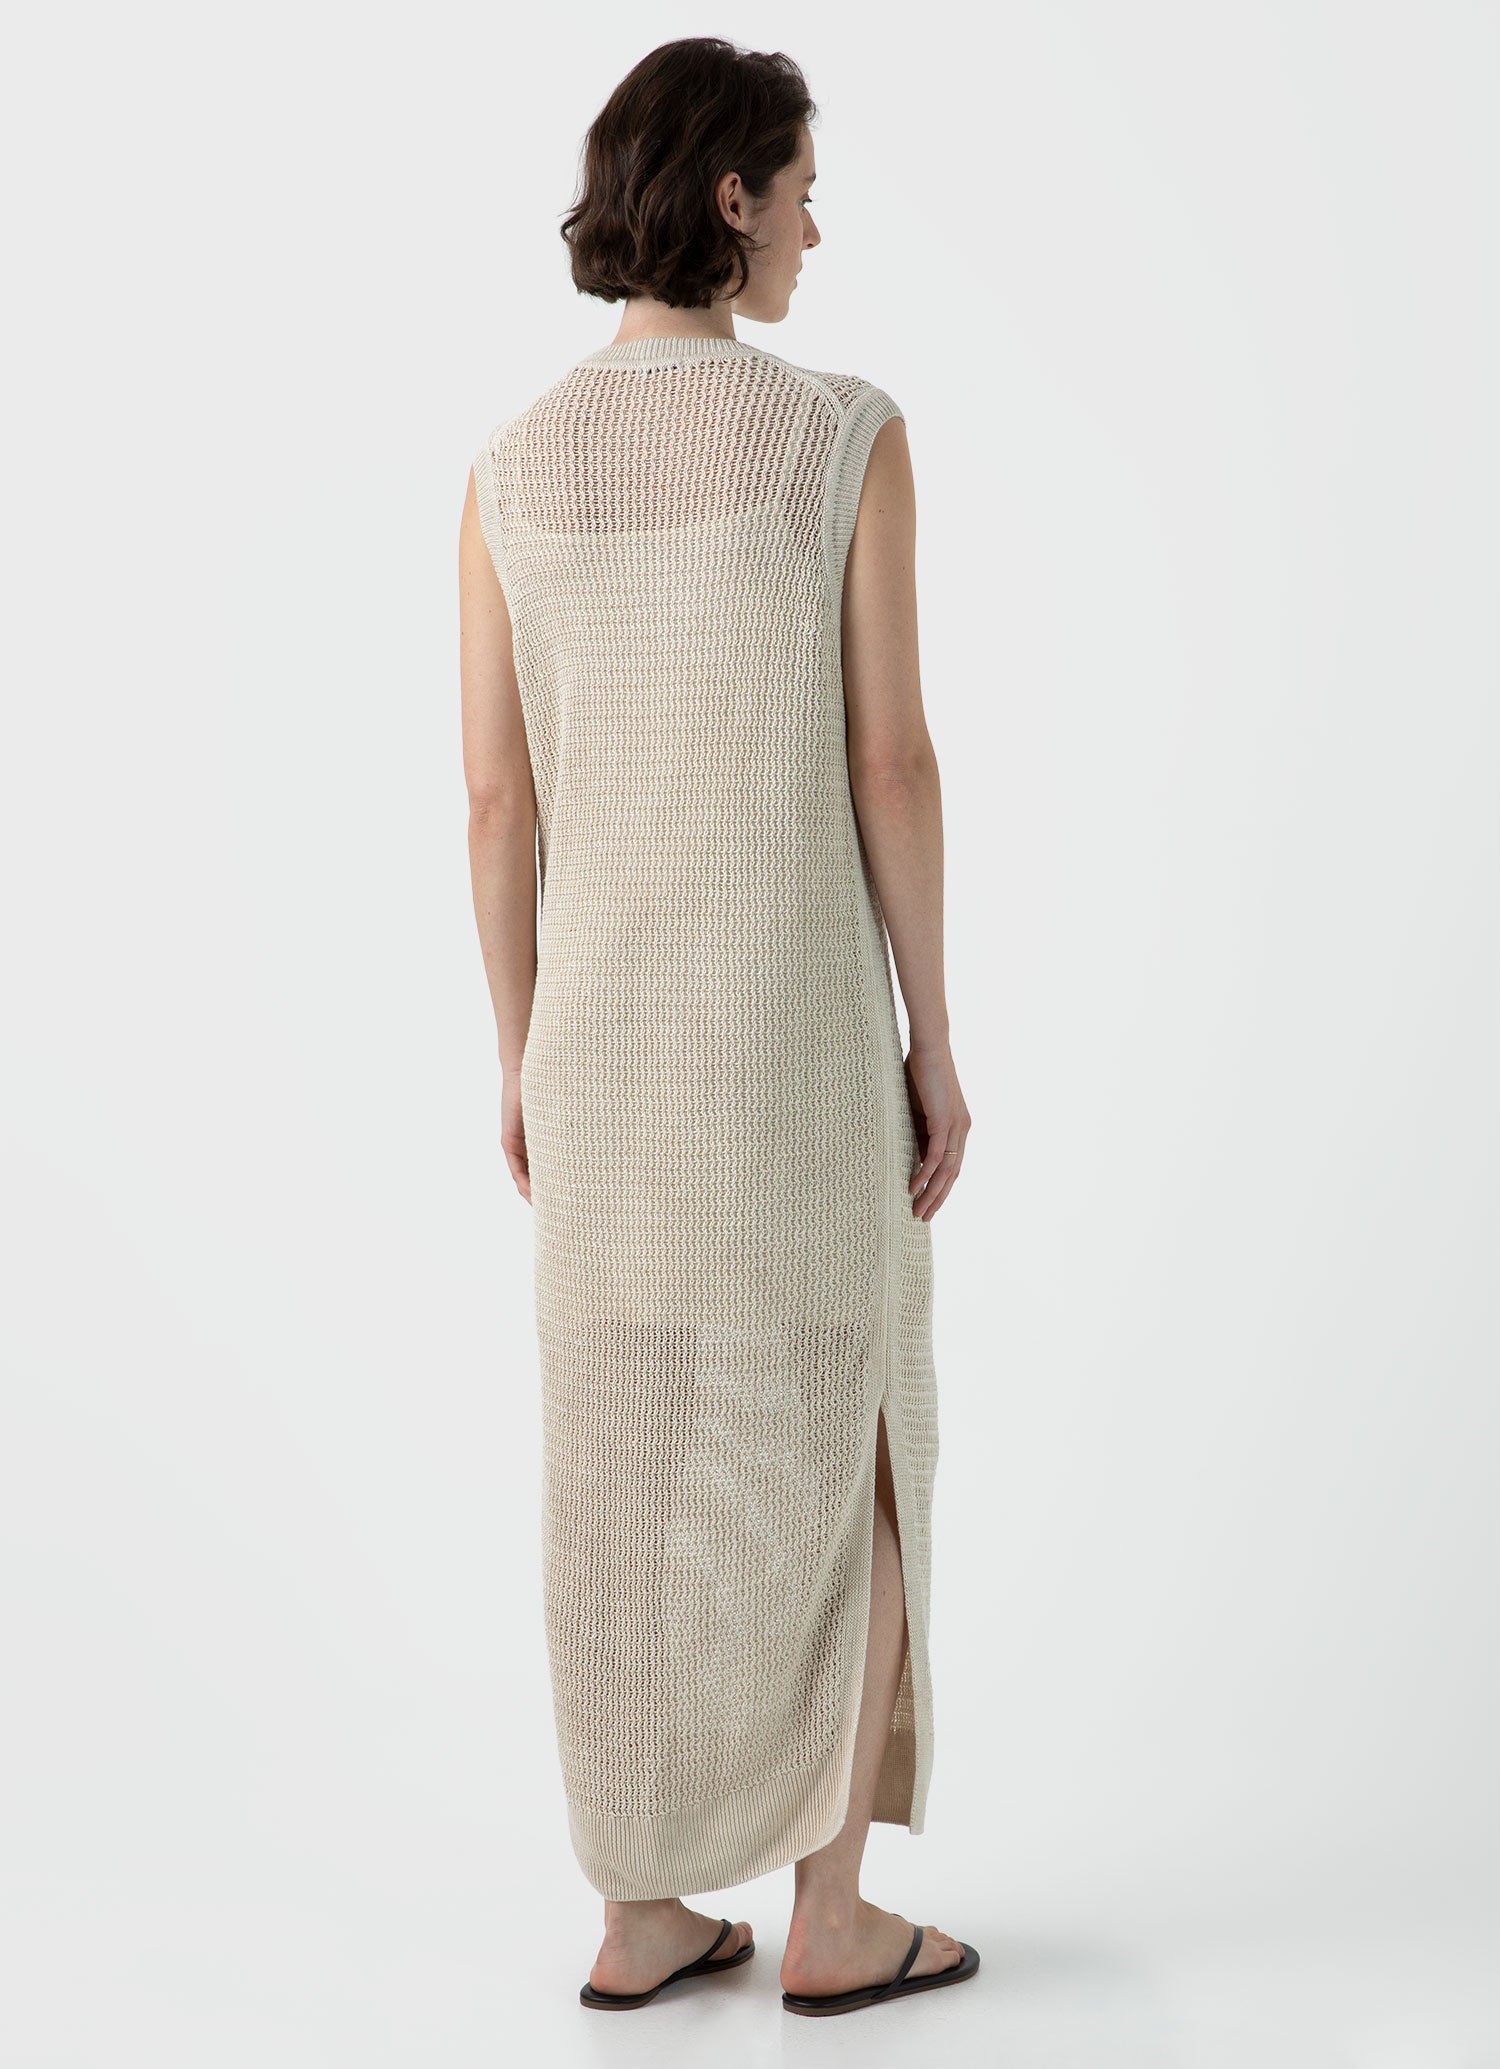 Women's Linen Mesh Dress in Ecru